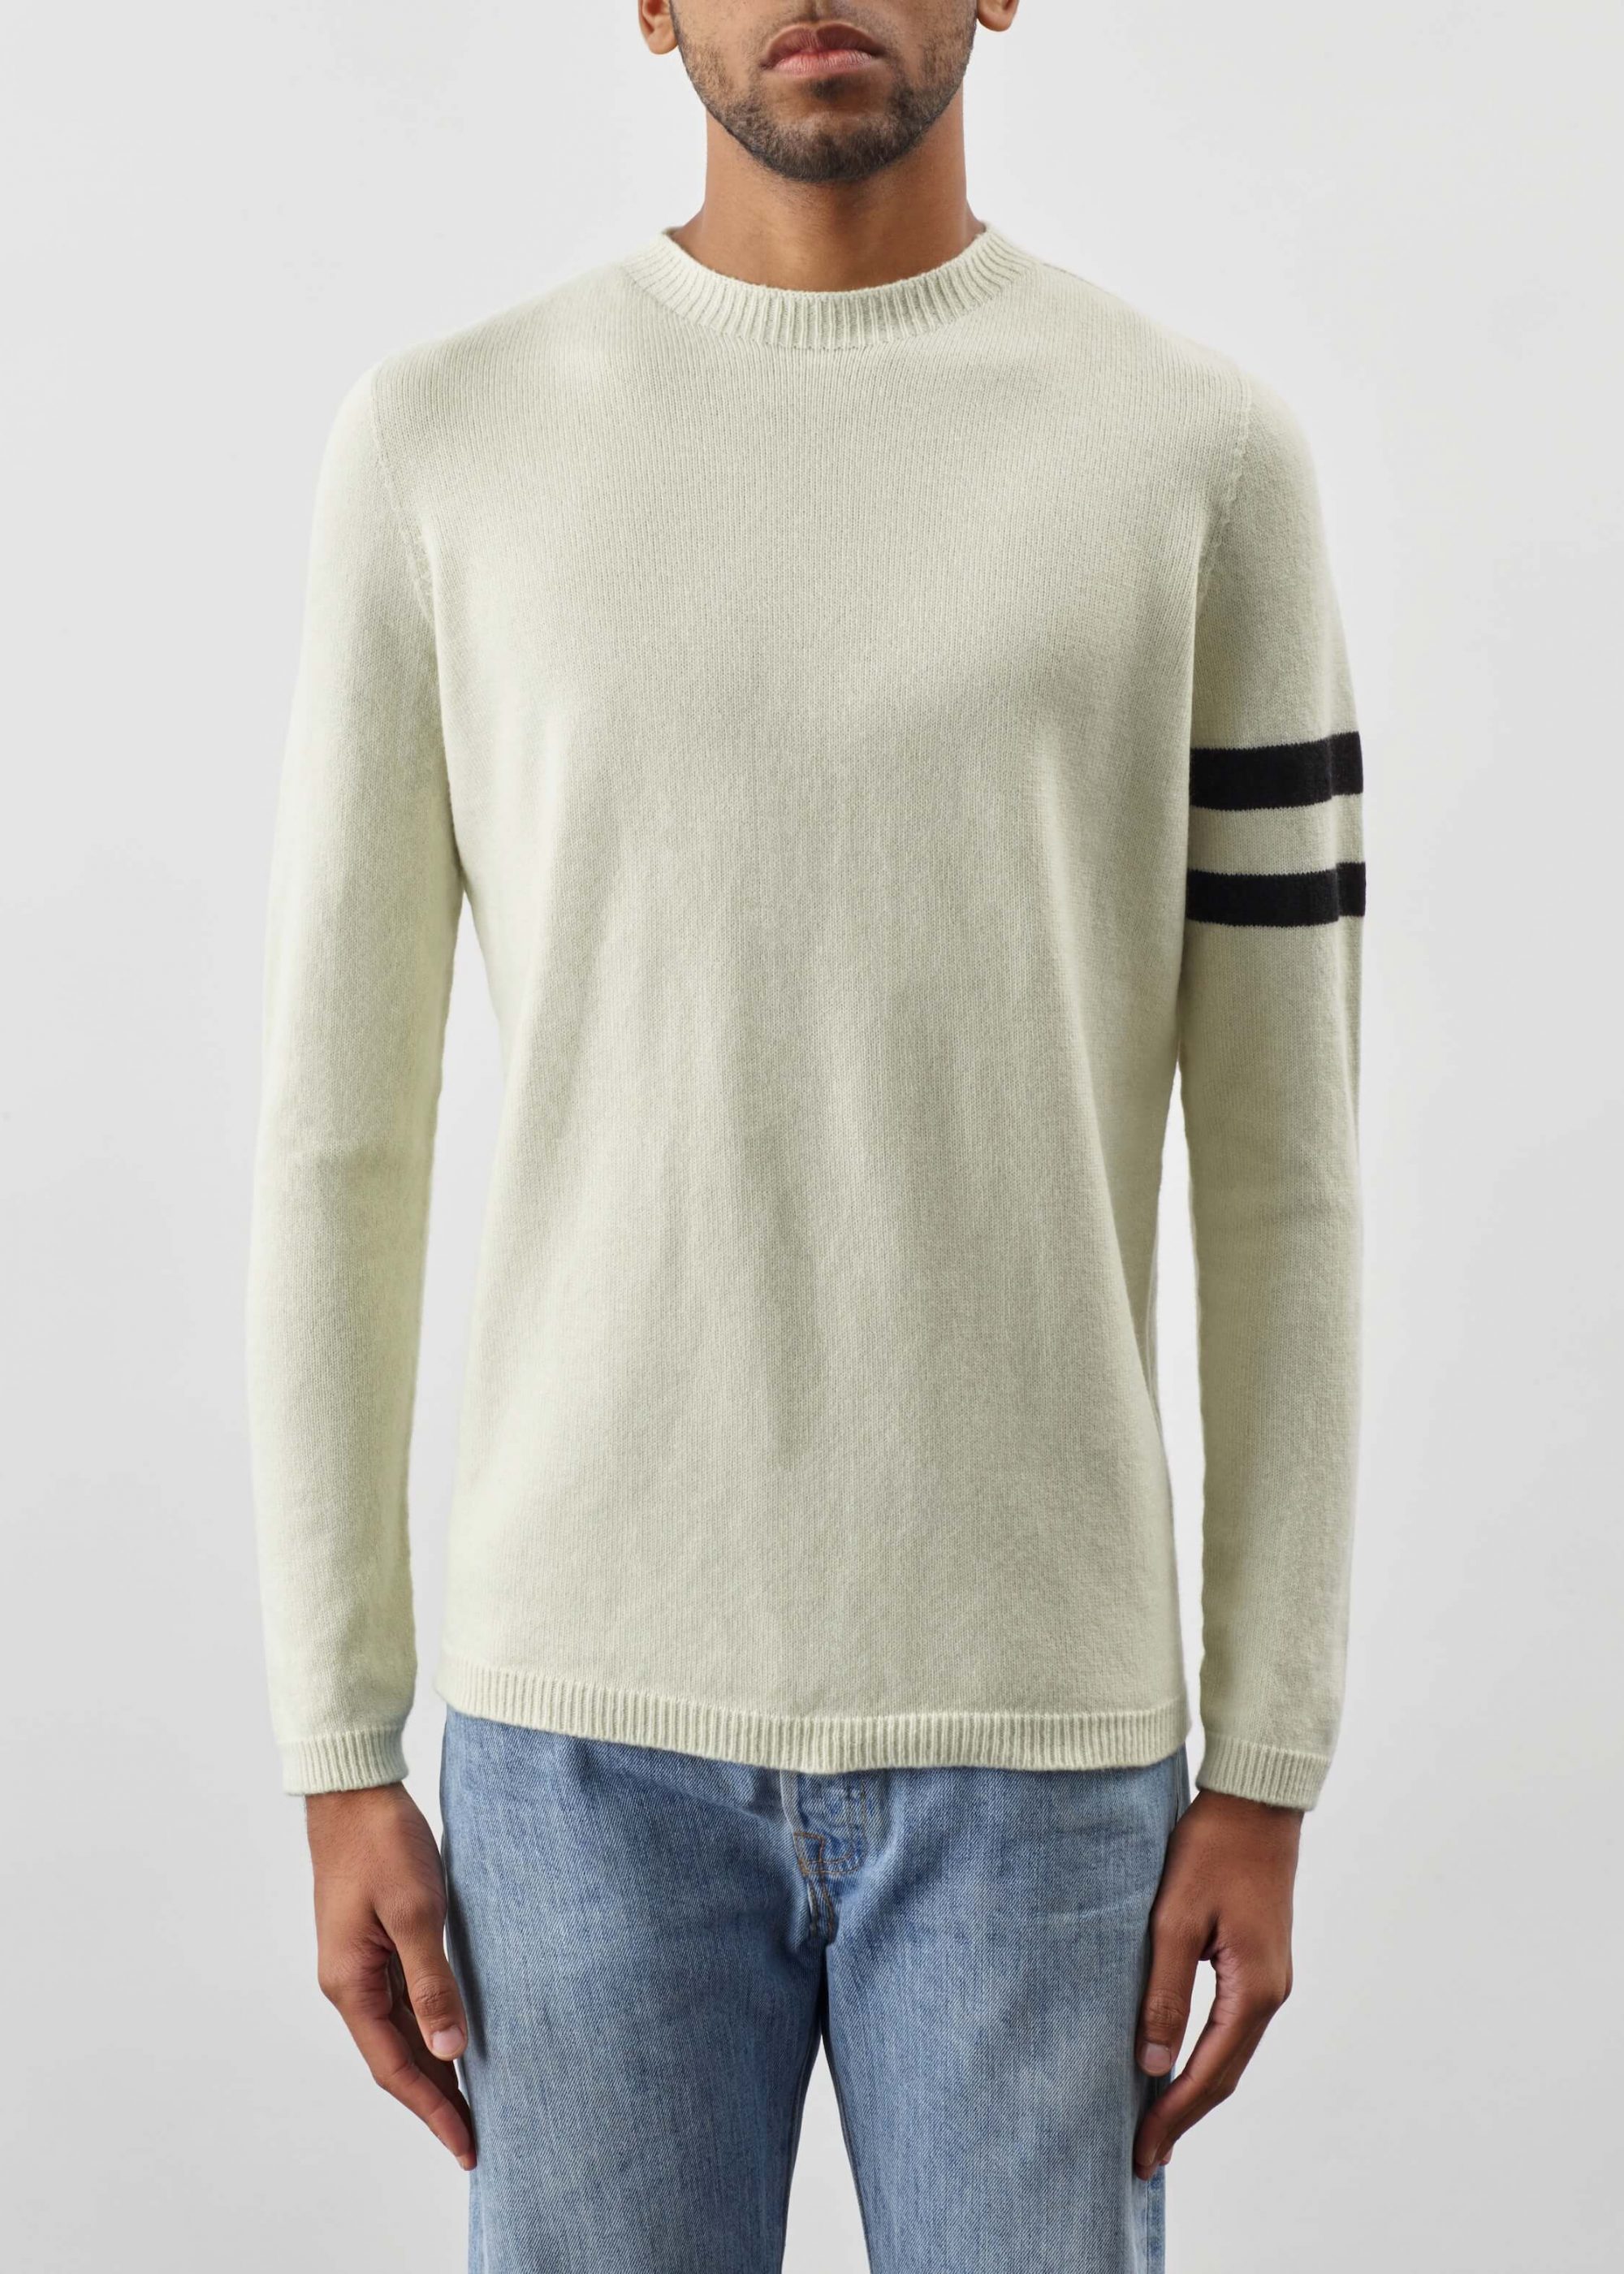 Product image for »Varsity« Ecru Black Sweater Felted Cashmere Merino